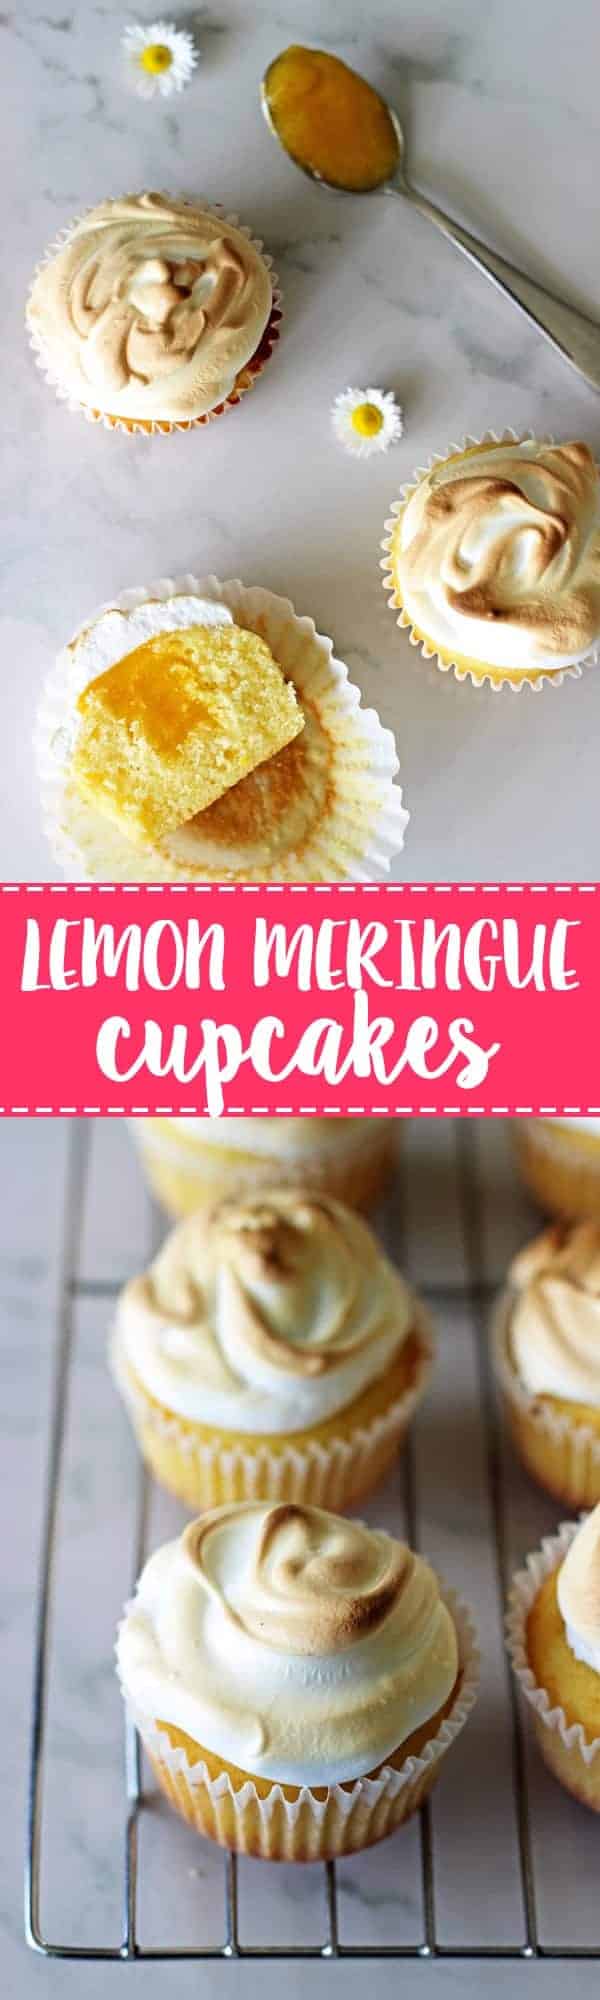 Lemon Meringue Cupcakes - light lemon cupcakes, filled with lemon curd & topped with meringue. They're the perfect spring dessert #cupcakes #spring #lemonmeringue #lemons #springbaking | thekiwicountrygirl.com